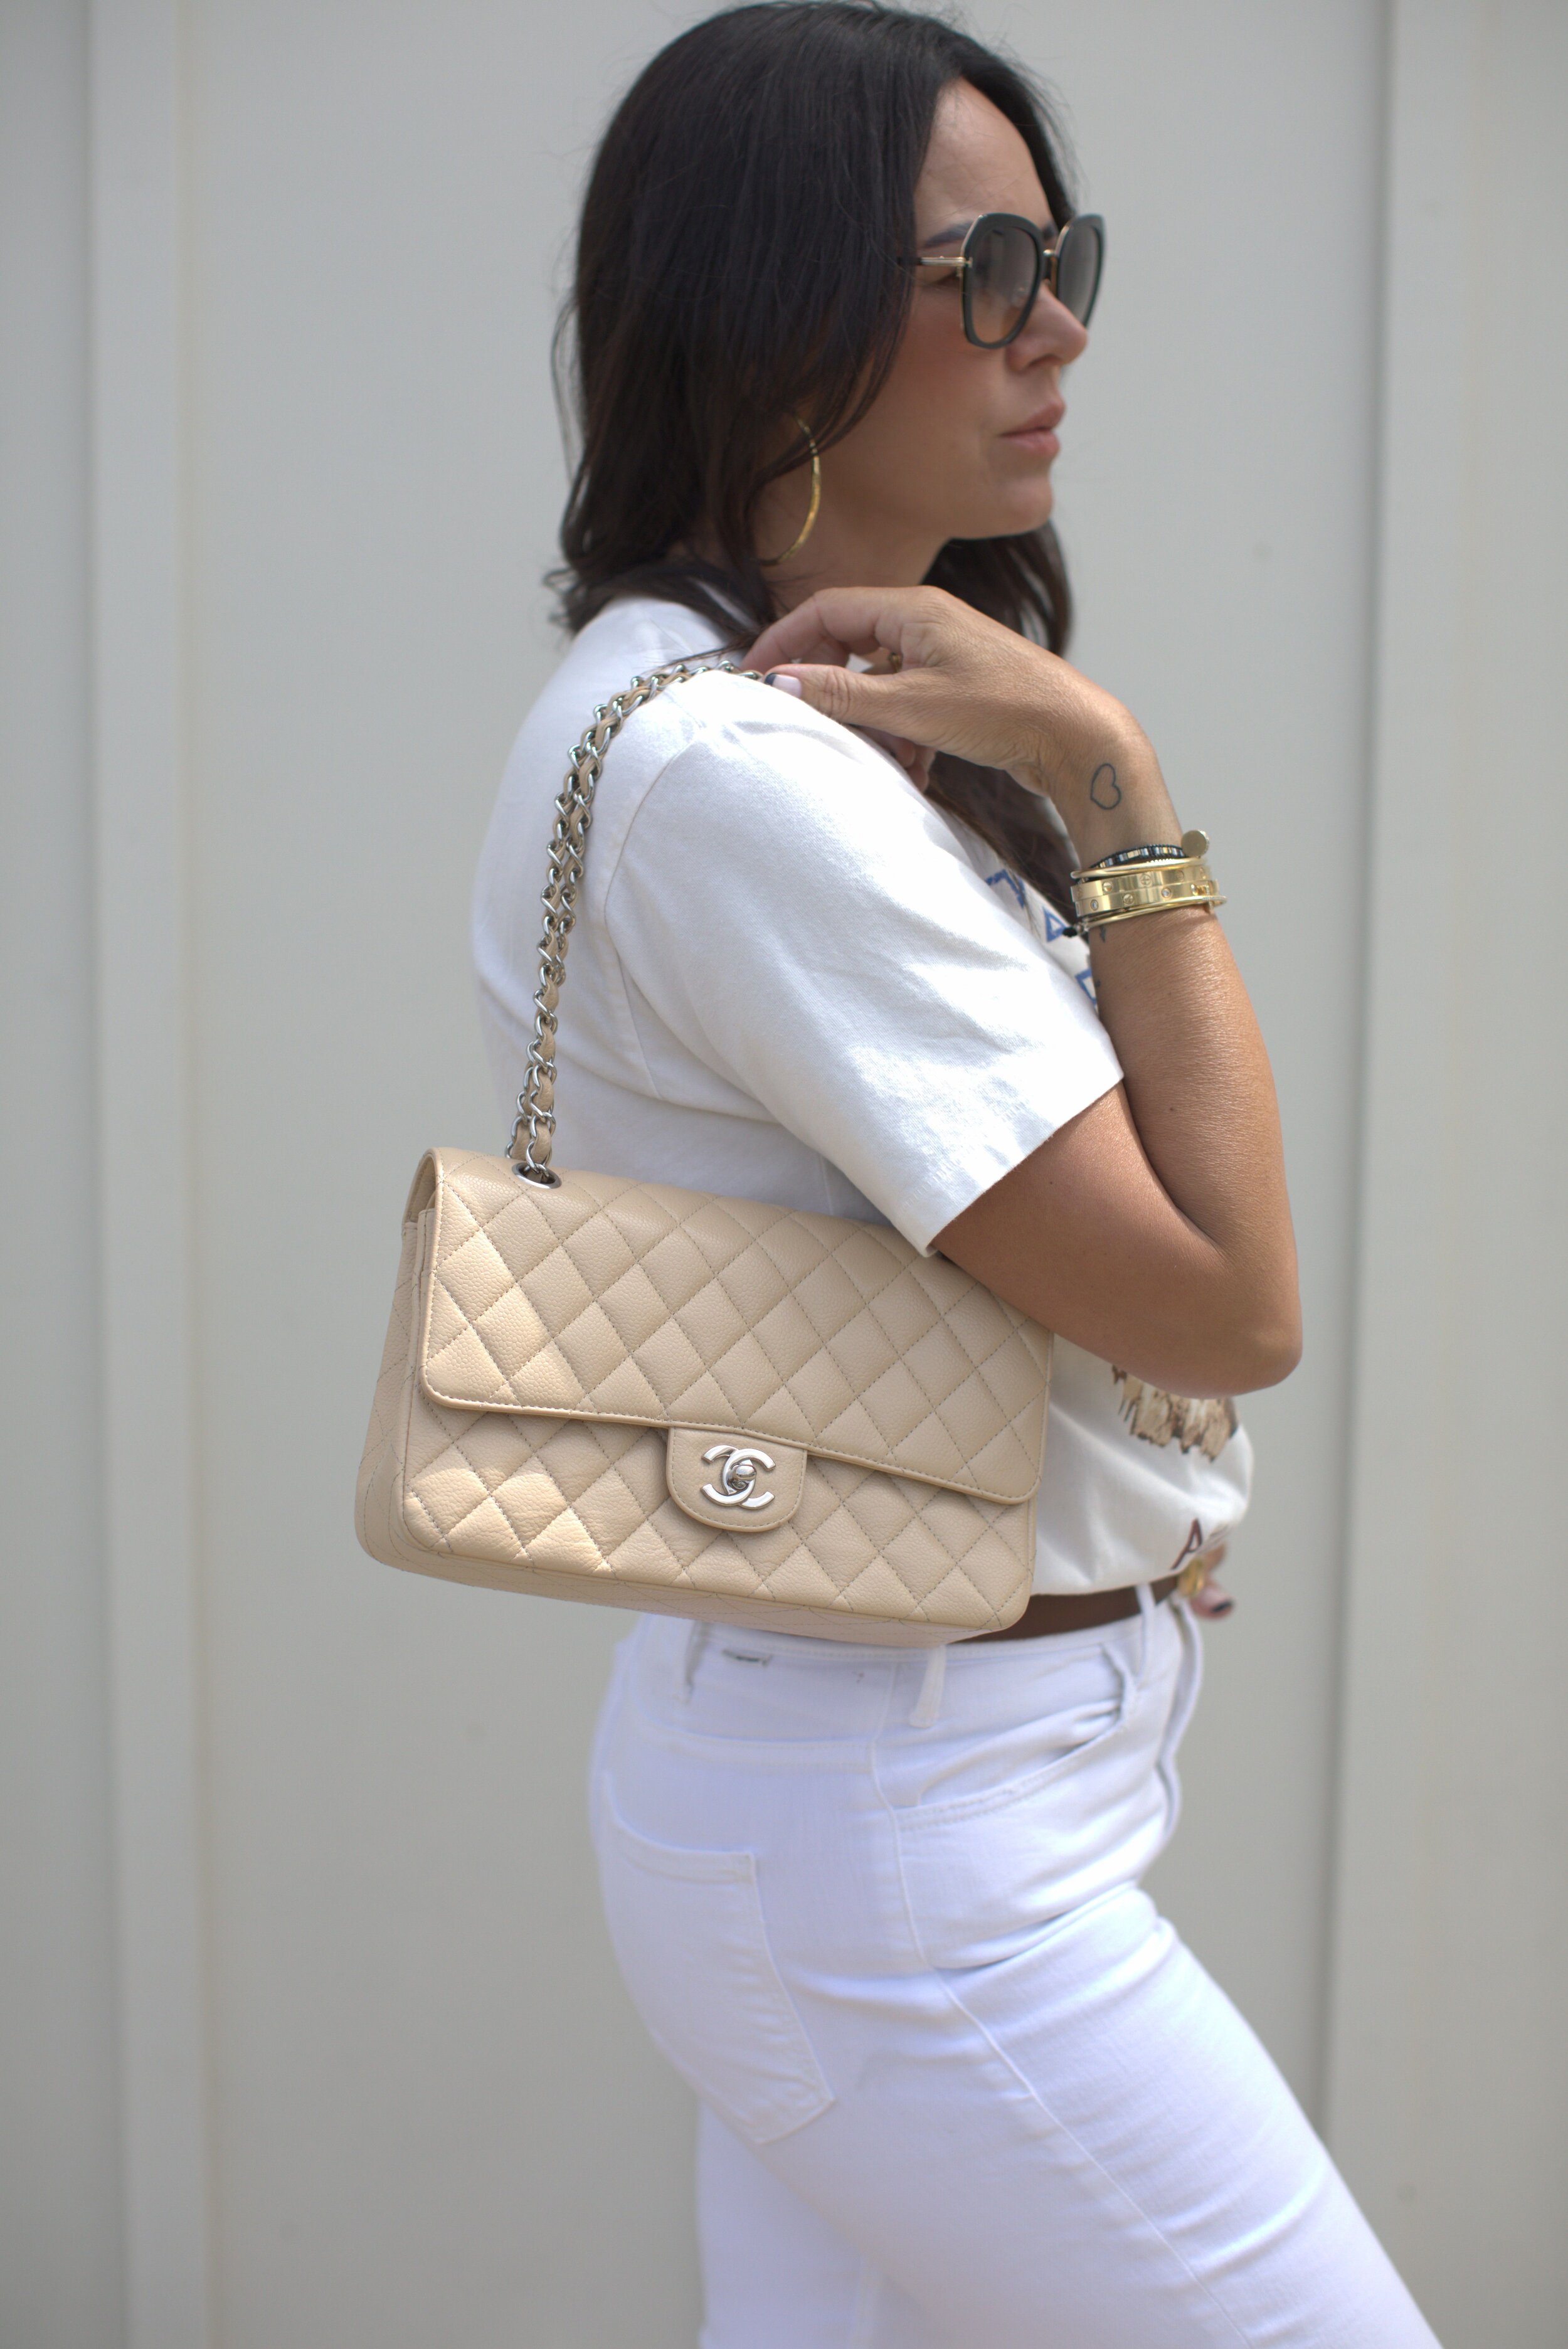 Anine Bing  Chanel handbags, Fashion, Fashion design dress